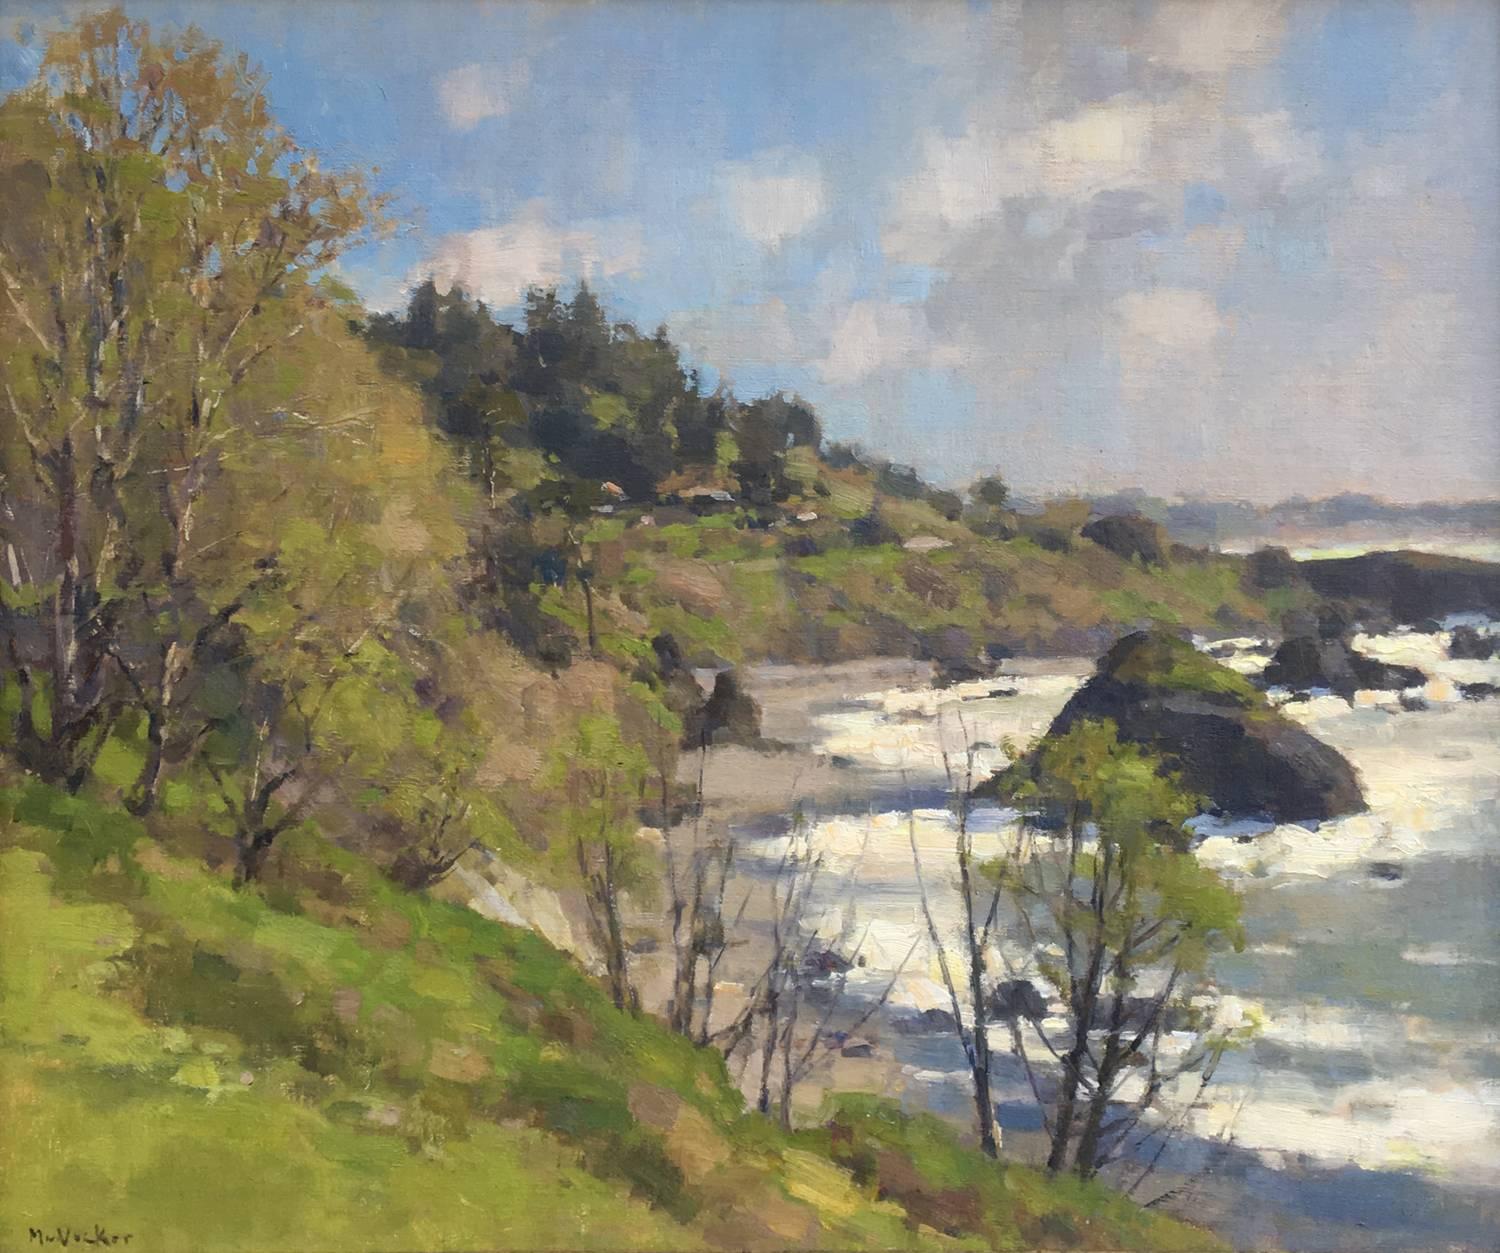 Coastal Spring; Trinidad, Humbolt County, California - Painting by Jim McVicker